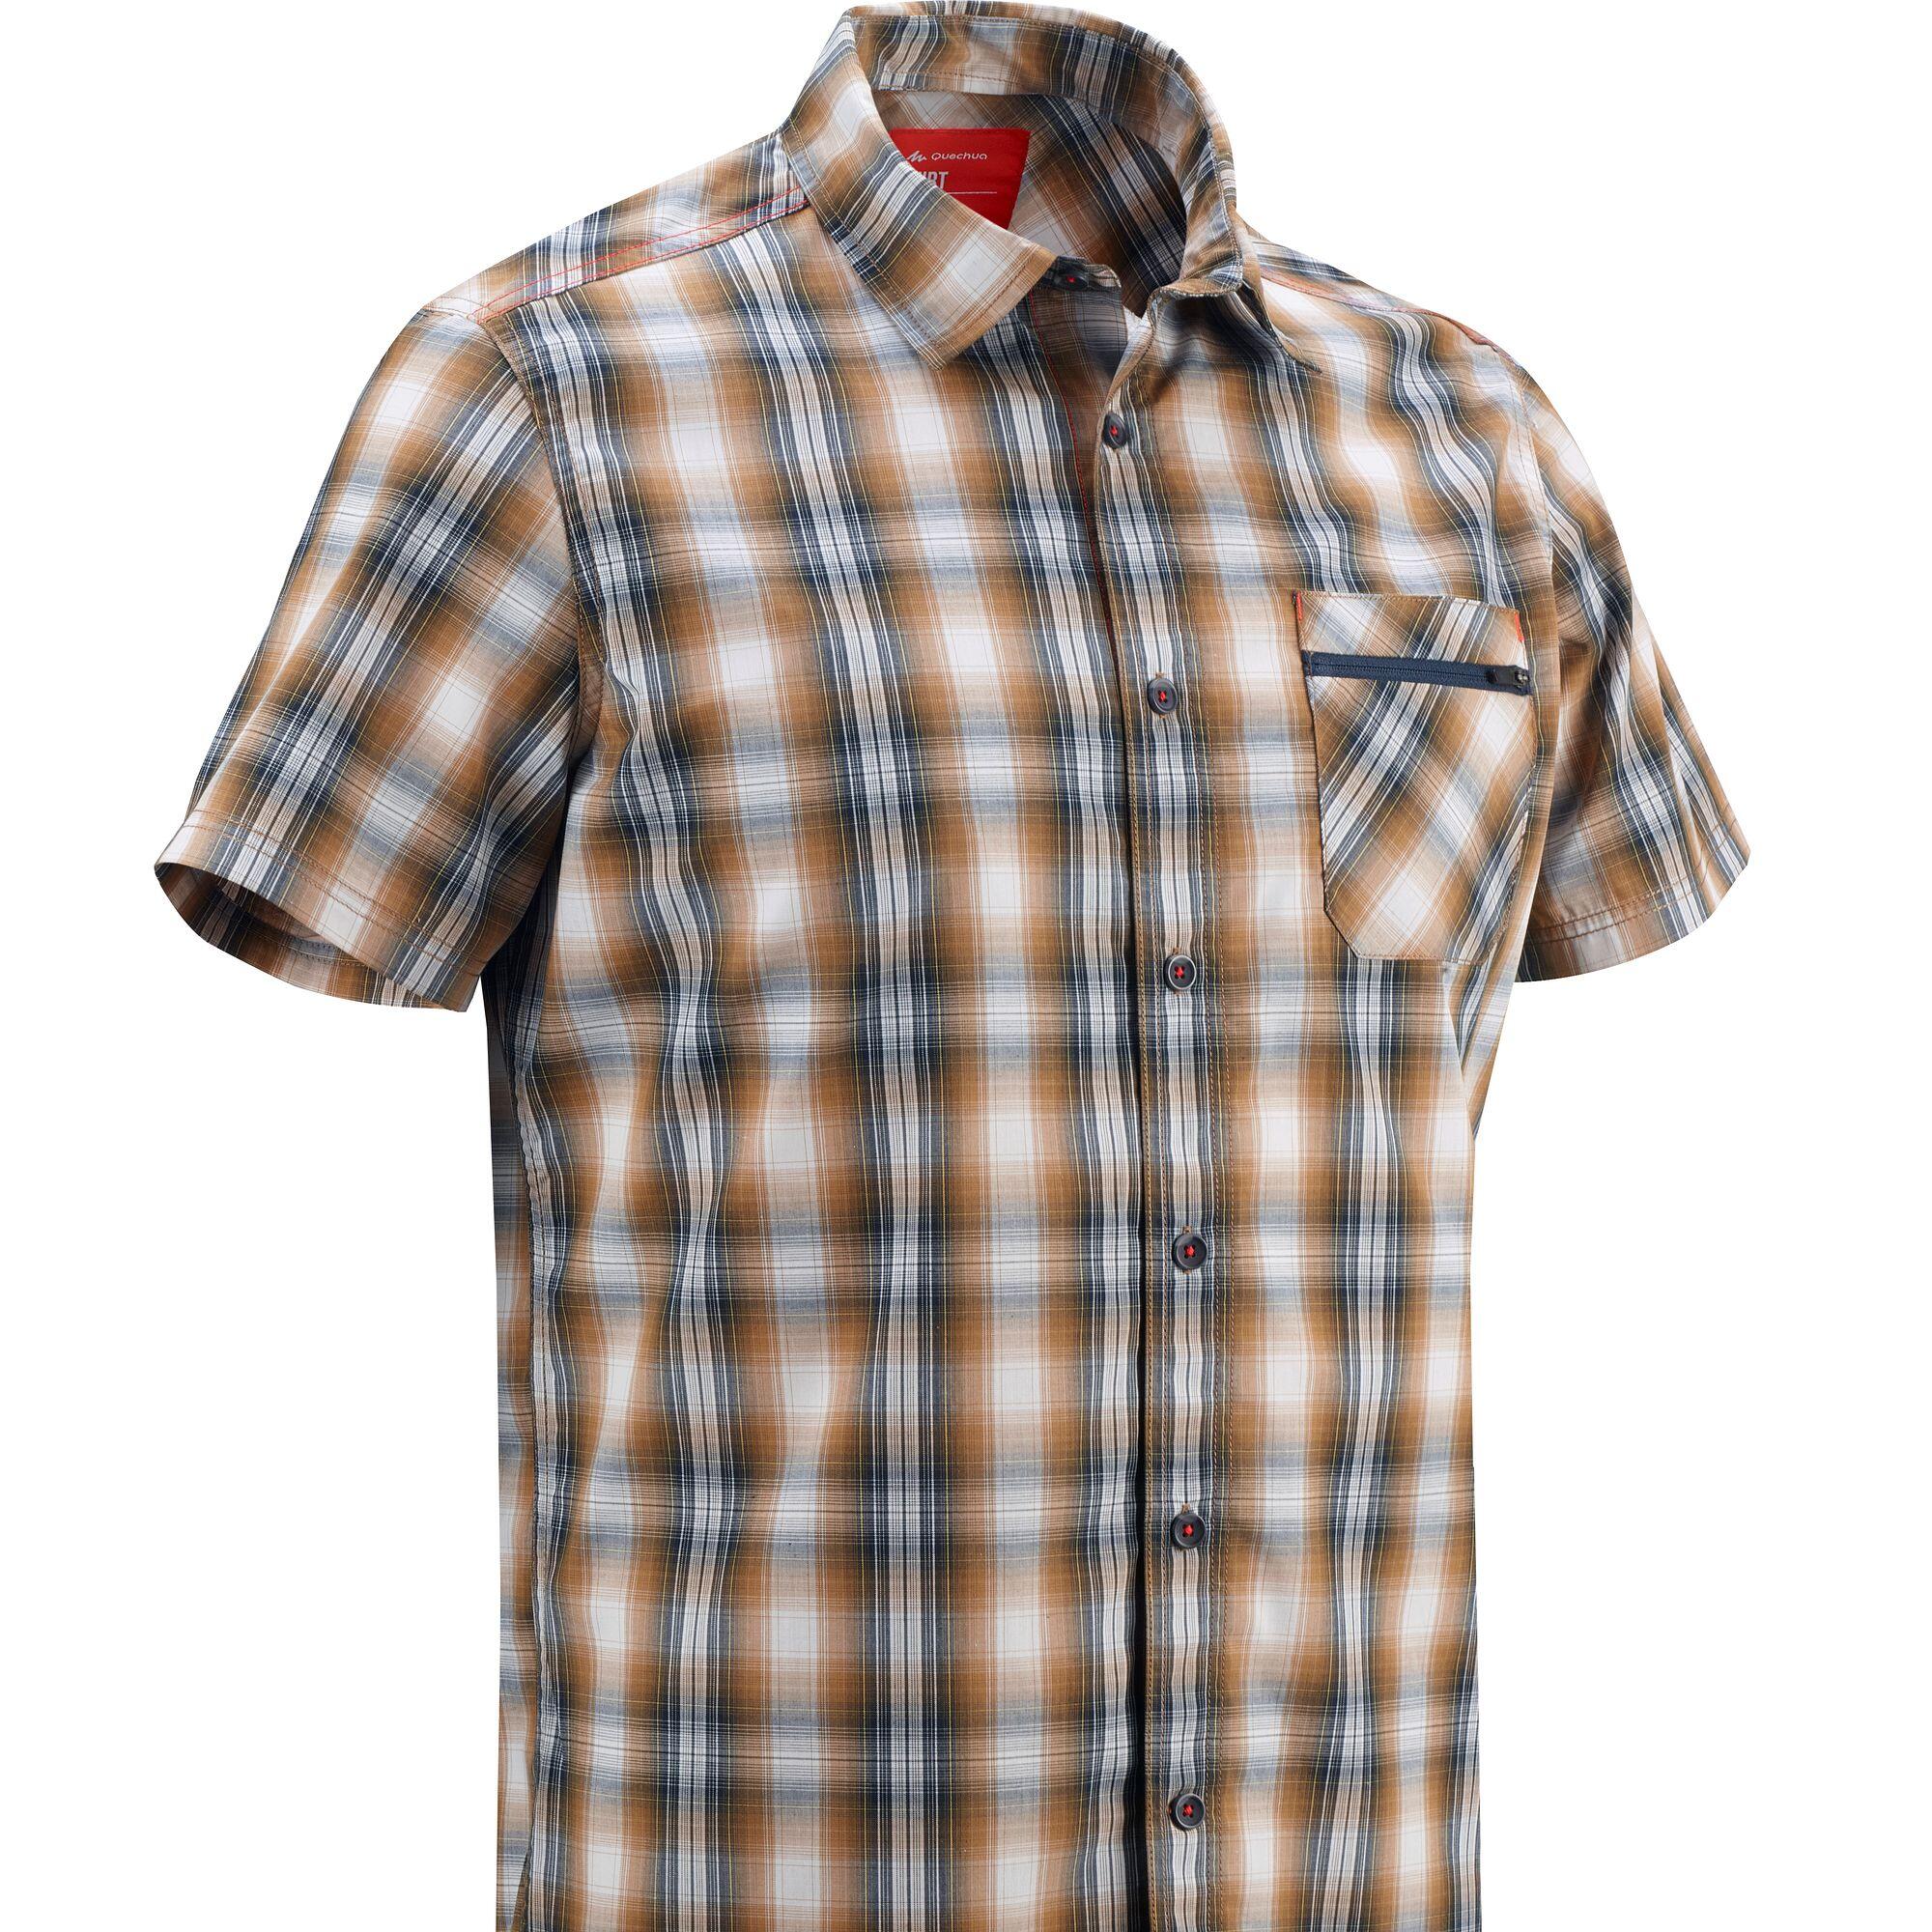 QUECHUA Arpenaz 100 Short-Sleeved Hiking Shirt - Brown